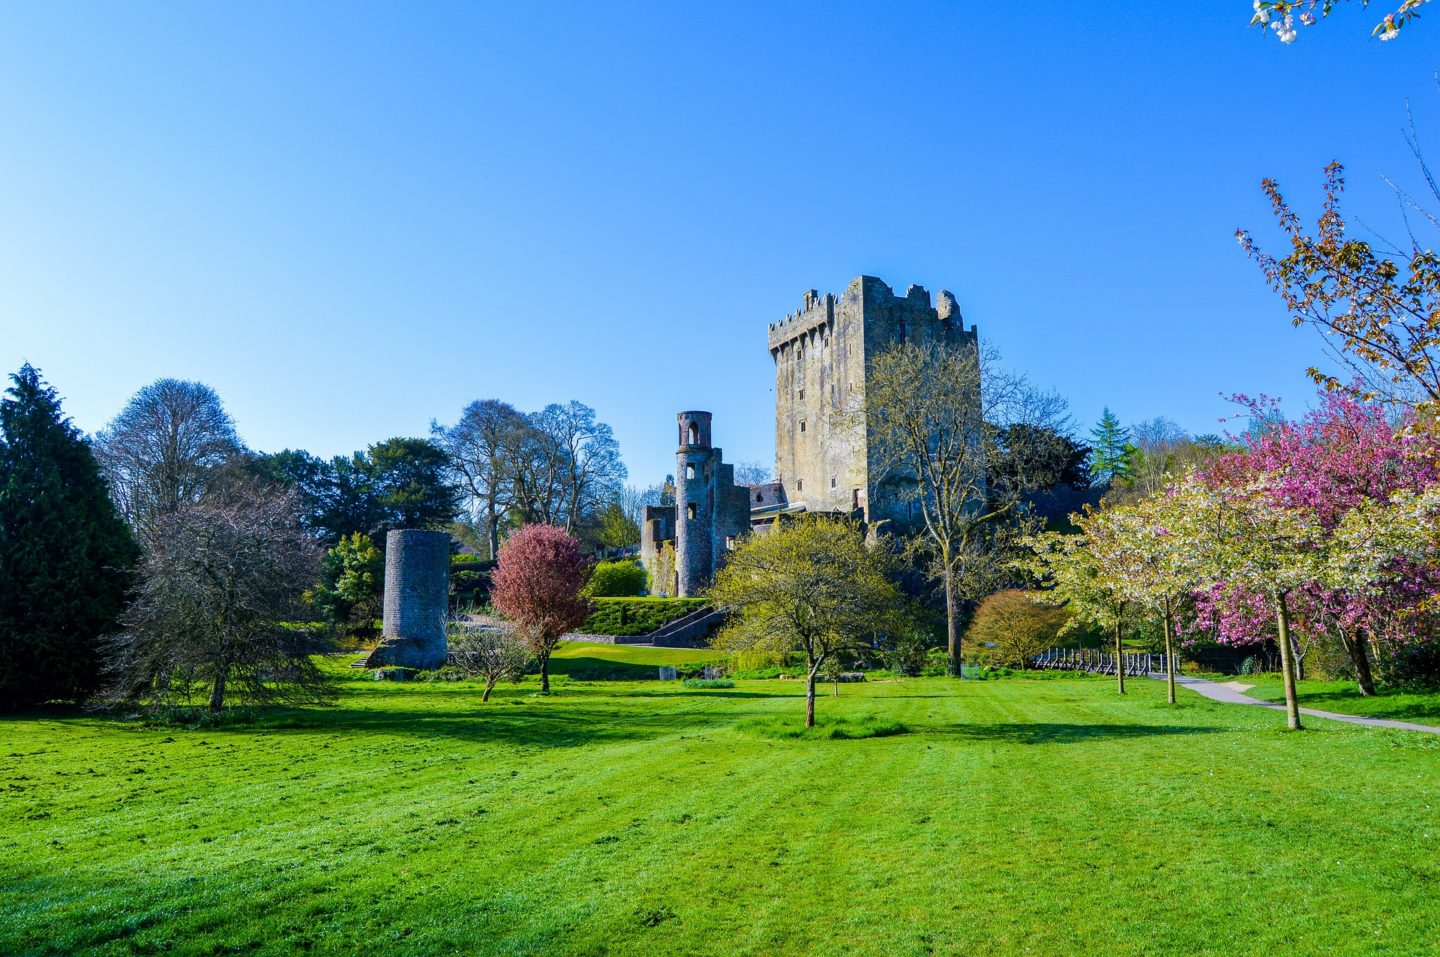 An image of Blarney Castle in Ireland